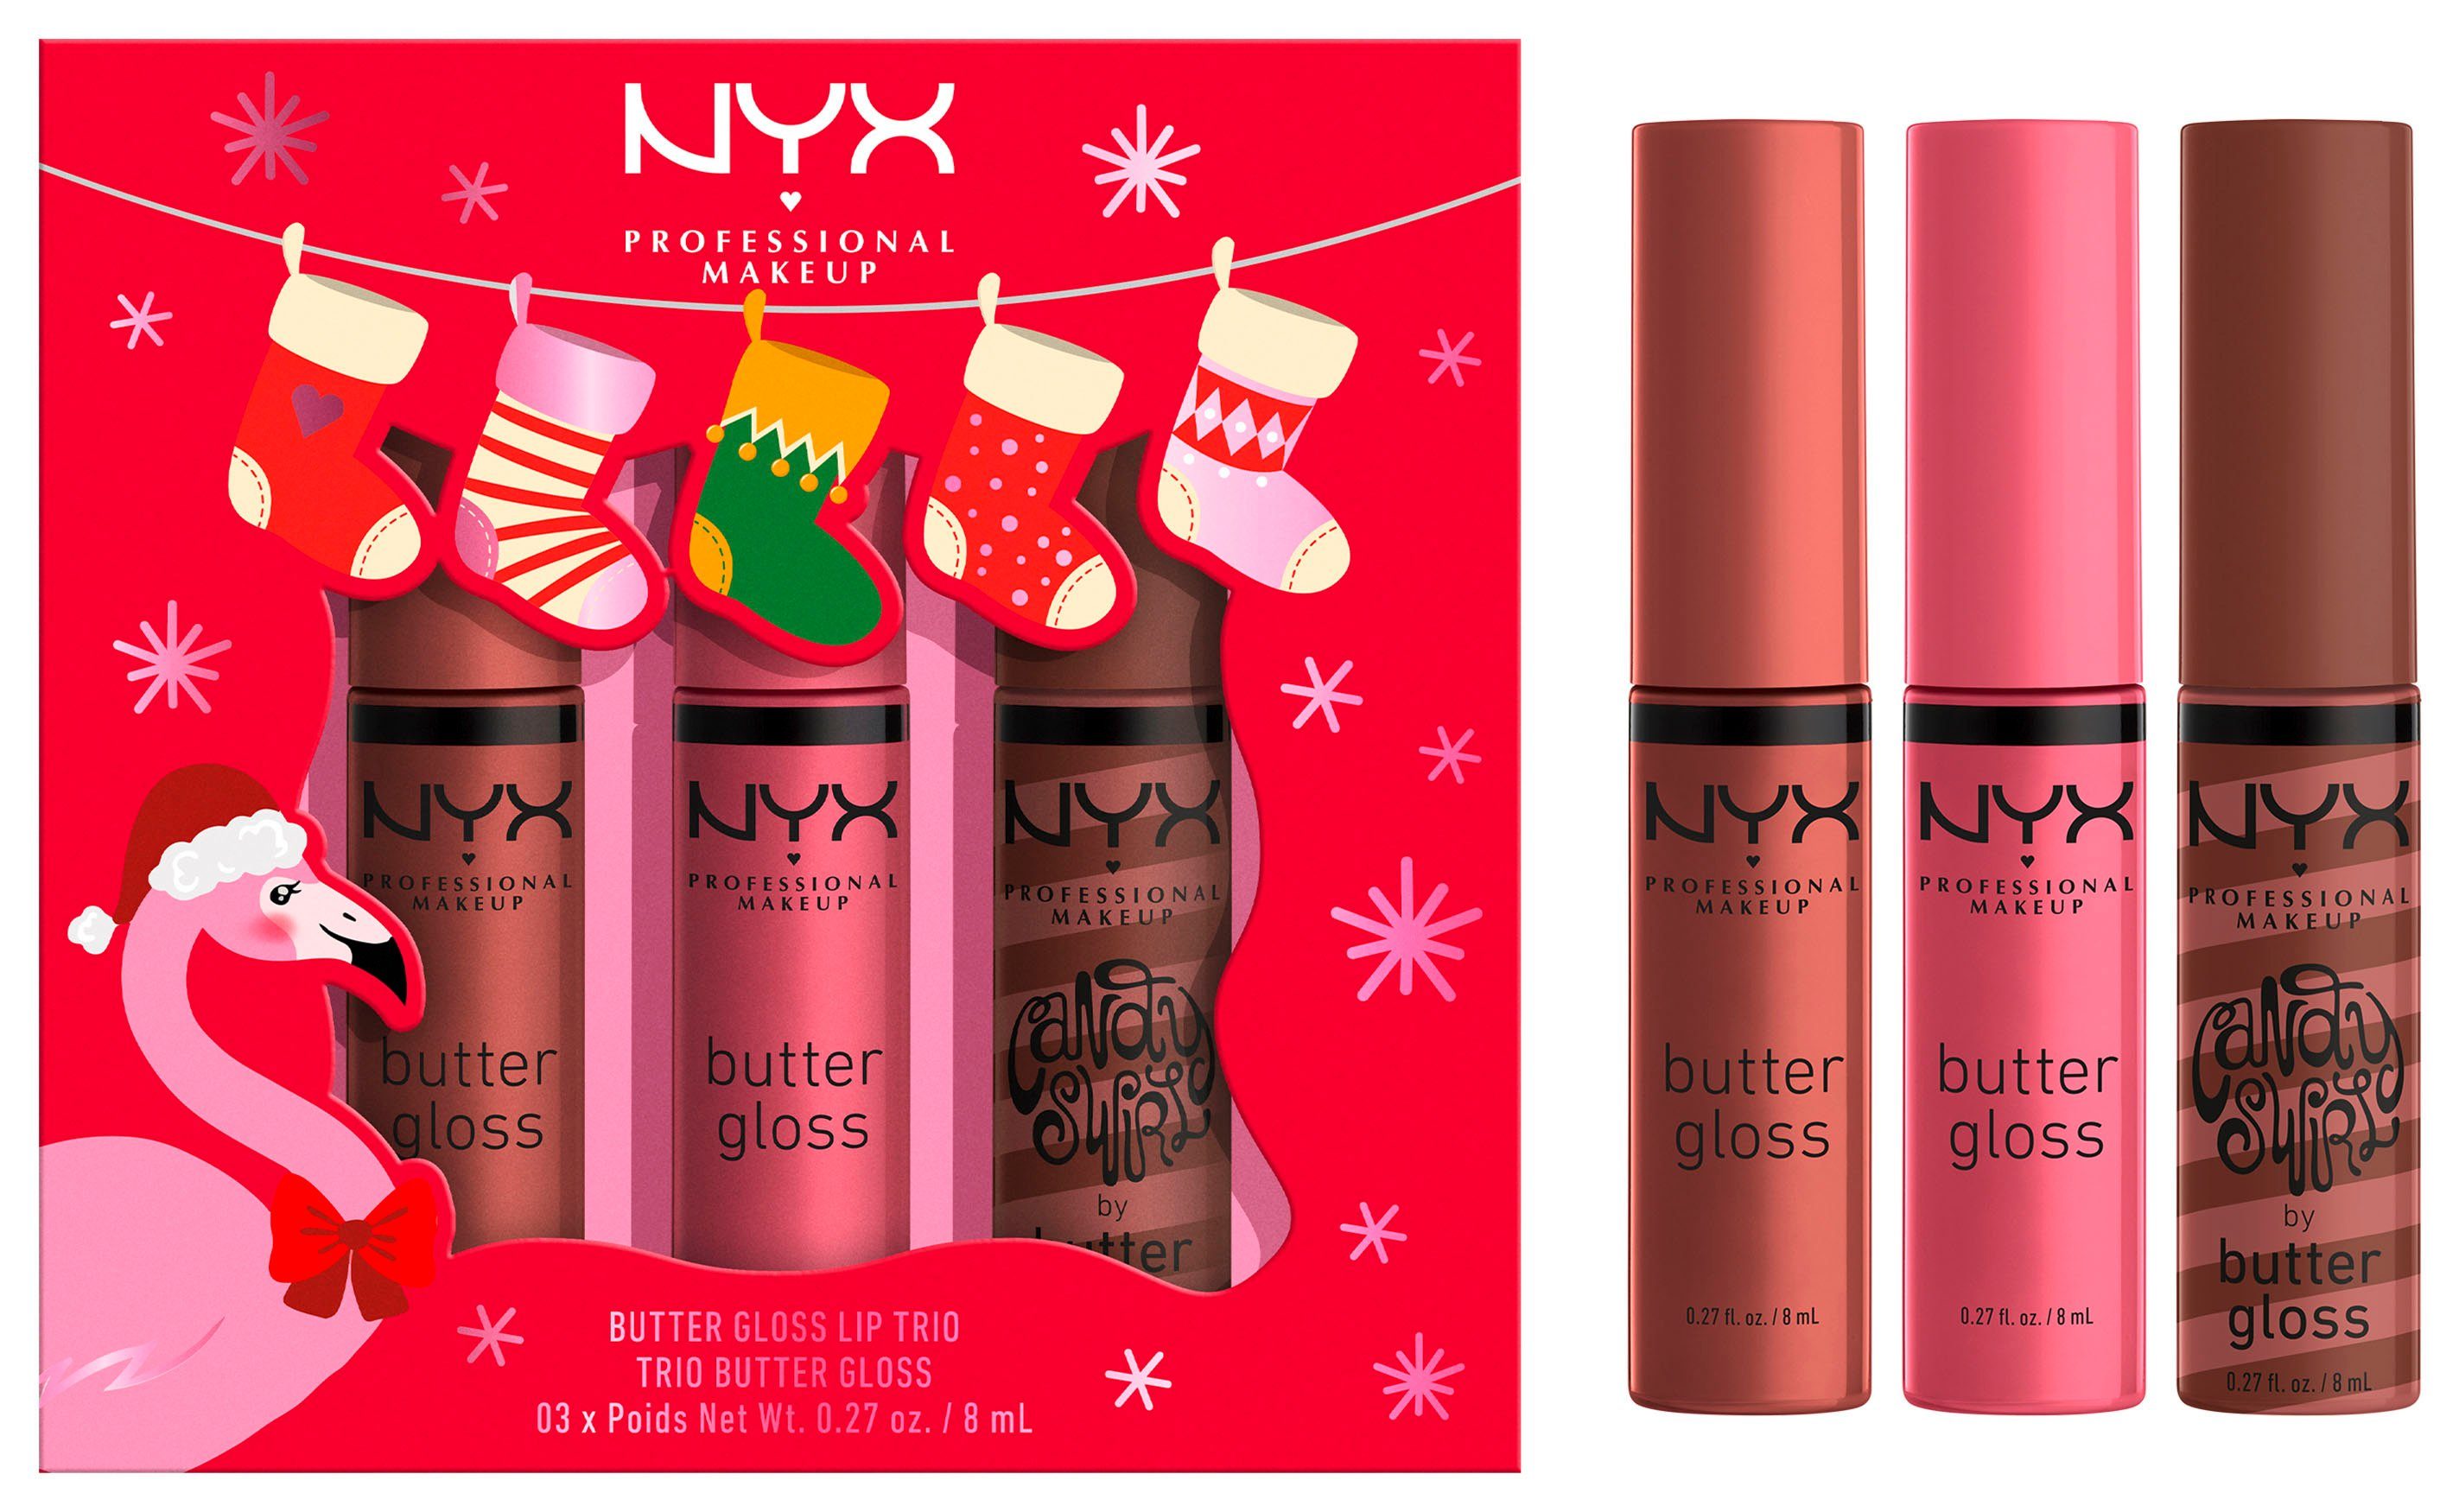 NYX Schmink-Set NYX Professional Gloss Makeup Butter Lip Trio